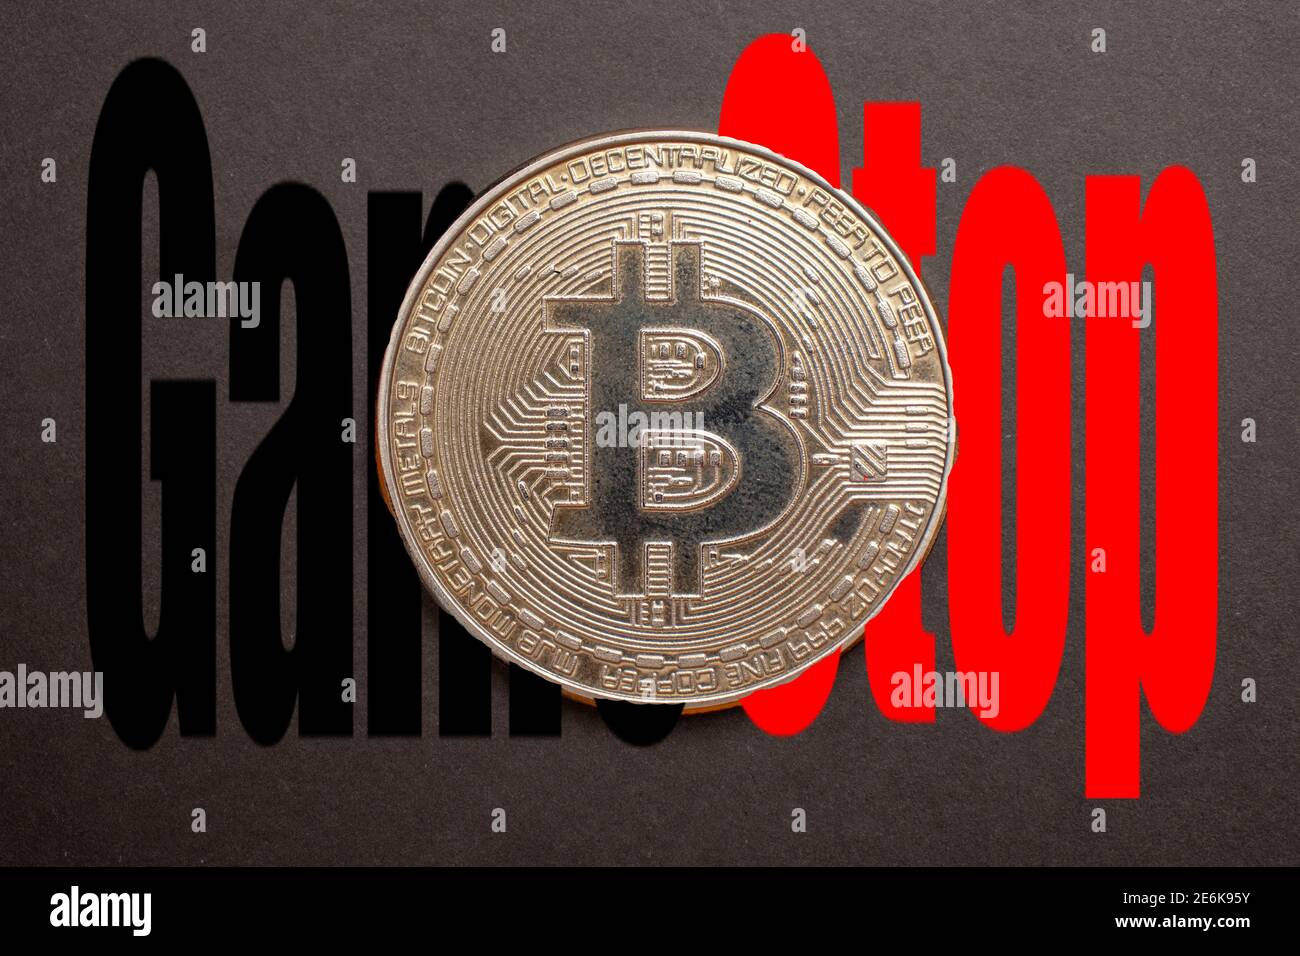 Buy bitcoins uk reddit программы майнинга для cointellect